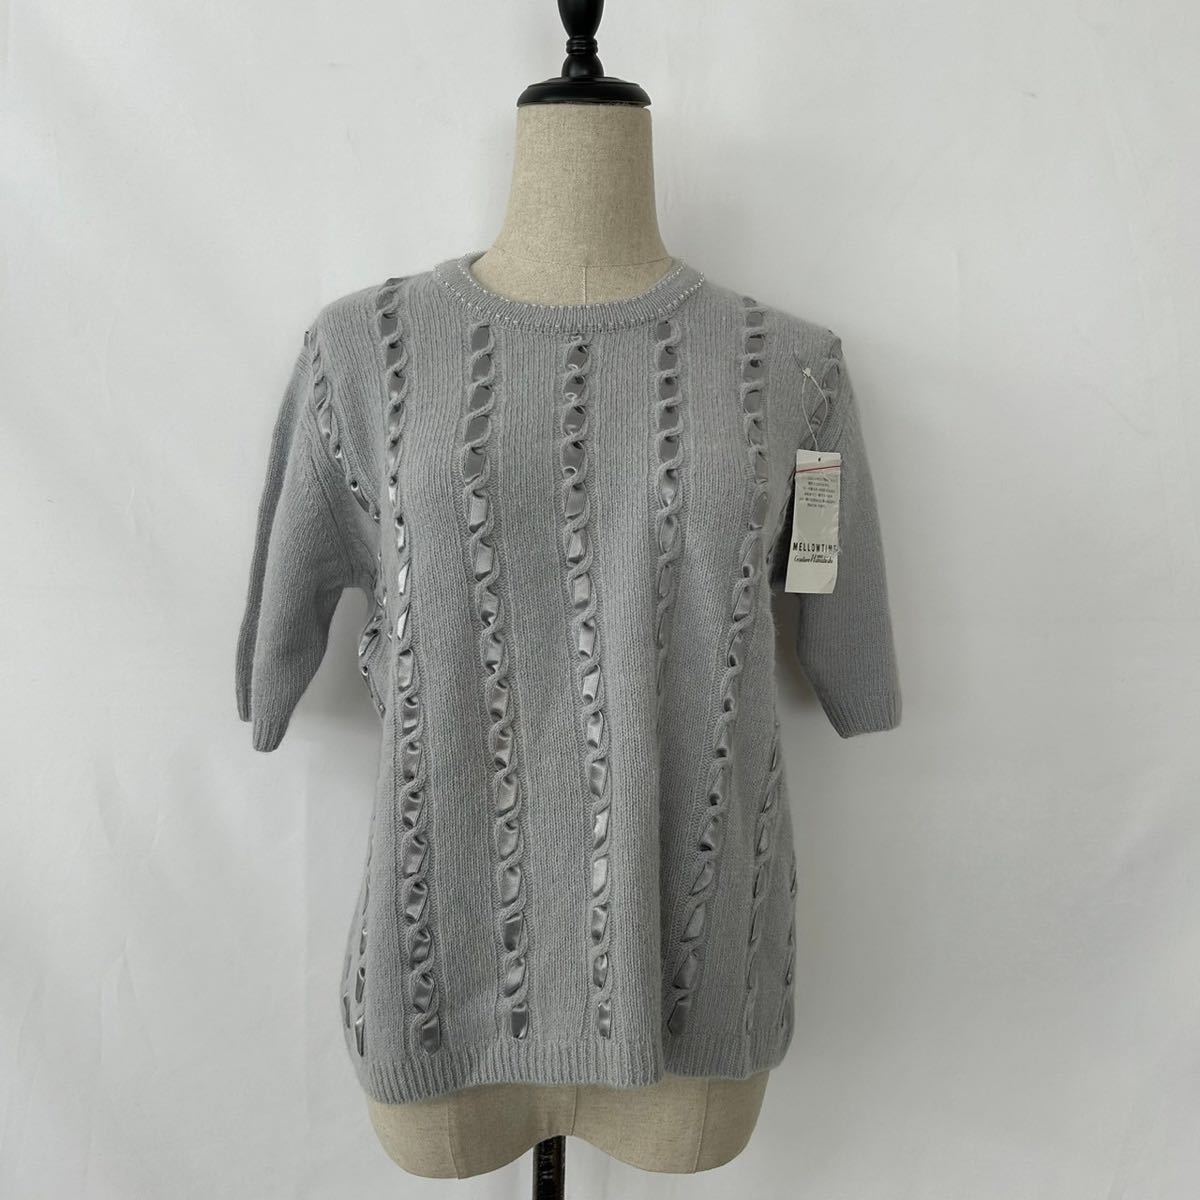  Гиндза цветок . кардиган свитер 2 шт. комплект новый товар не использовался Anne gola ансамбль вязаный sin ok лента кардиган HANABISHI